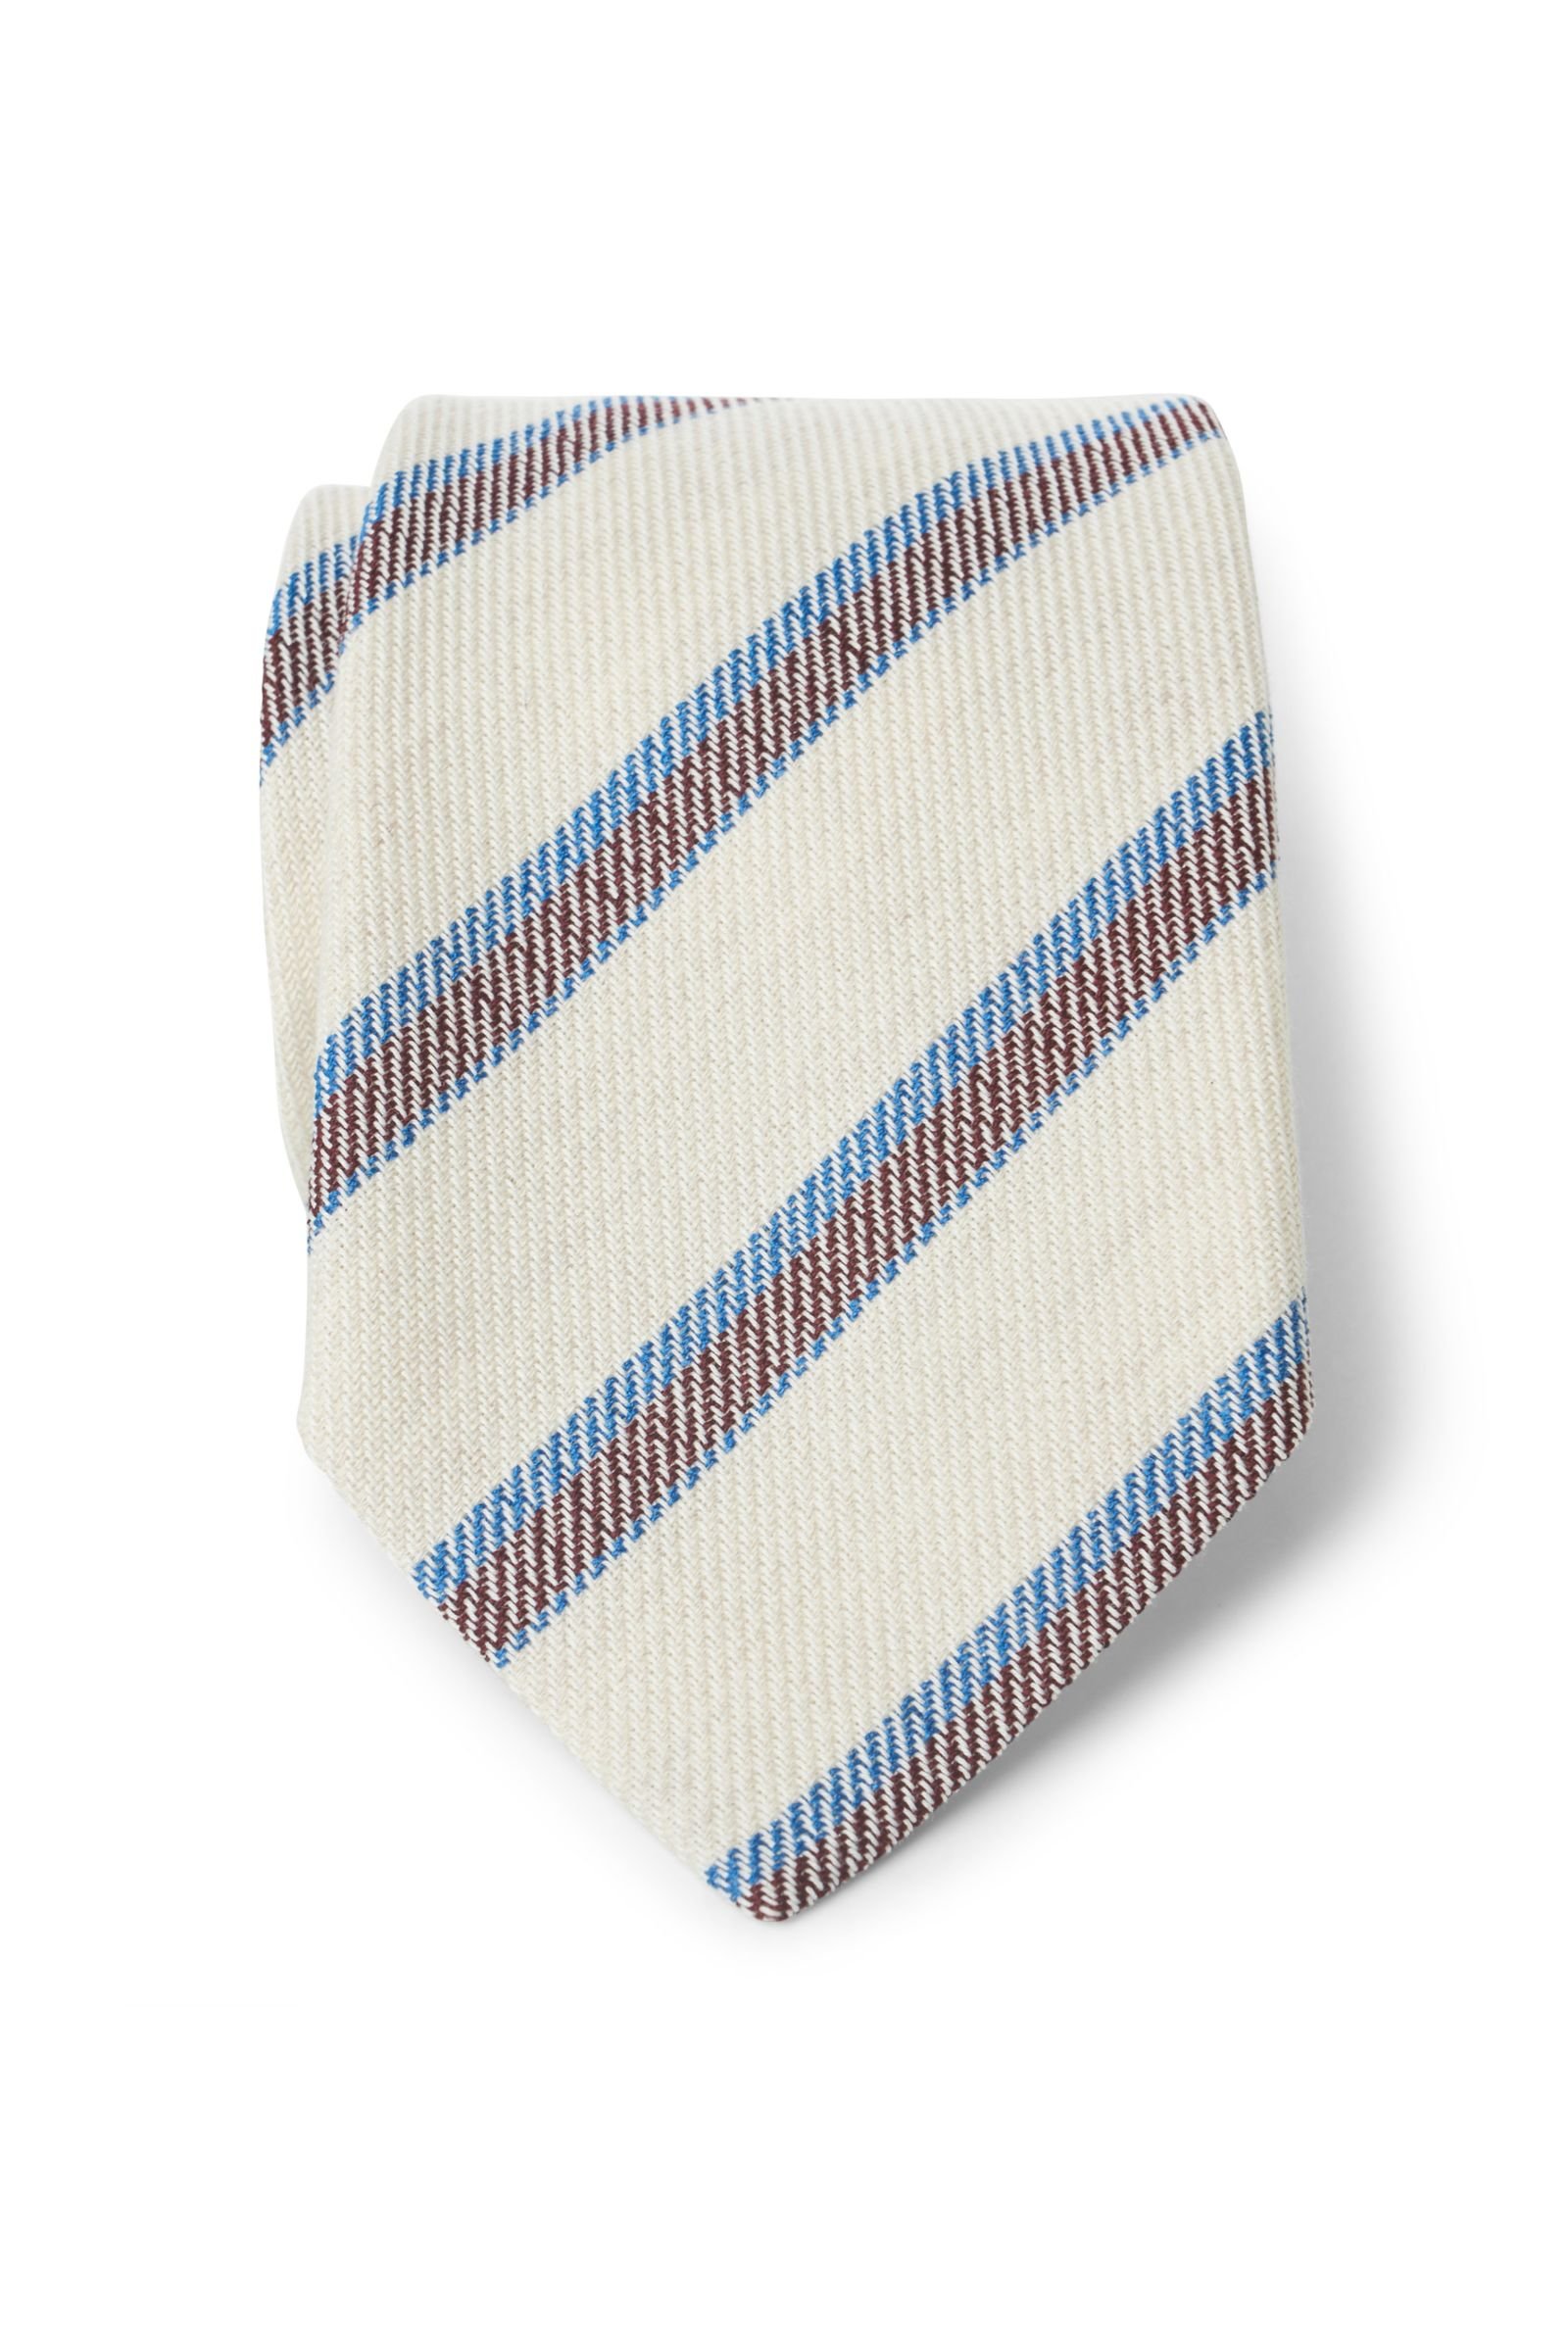 Tie cream/brown/blue striped